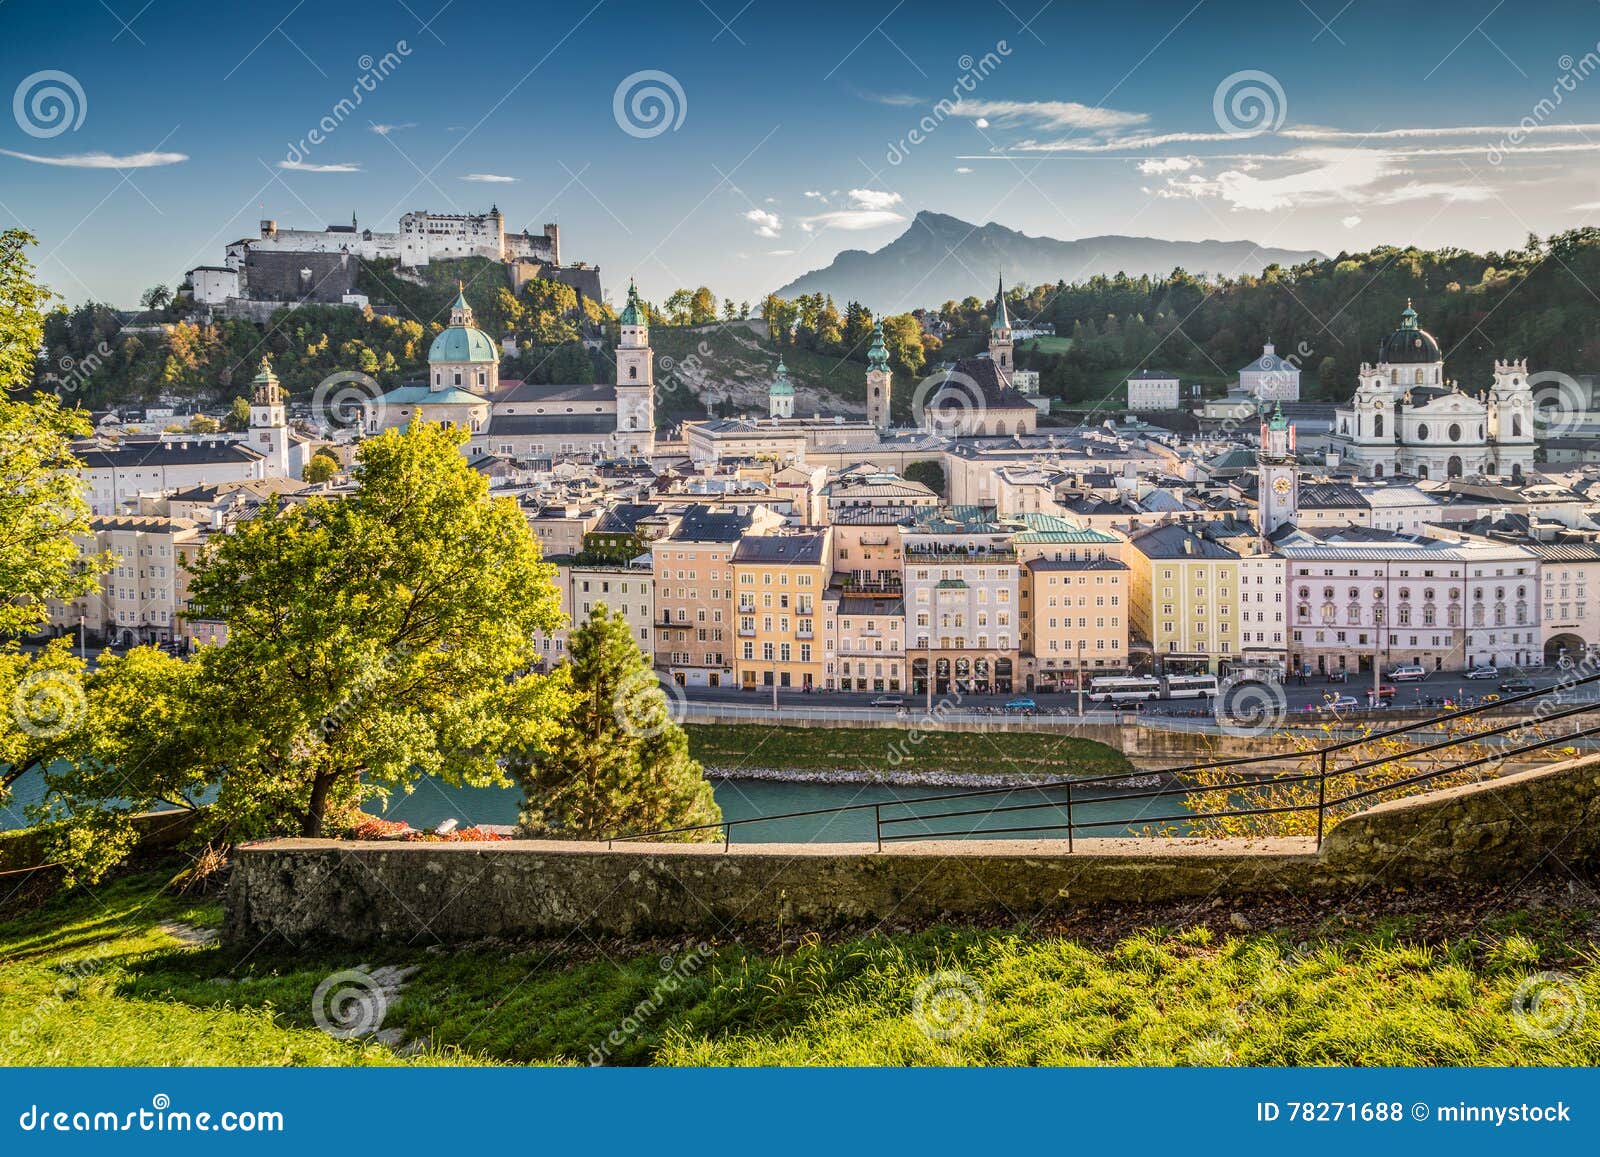 historic city of salzburg at sunset, salzburger land, austria